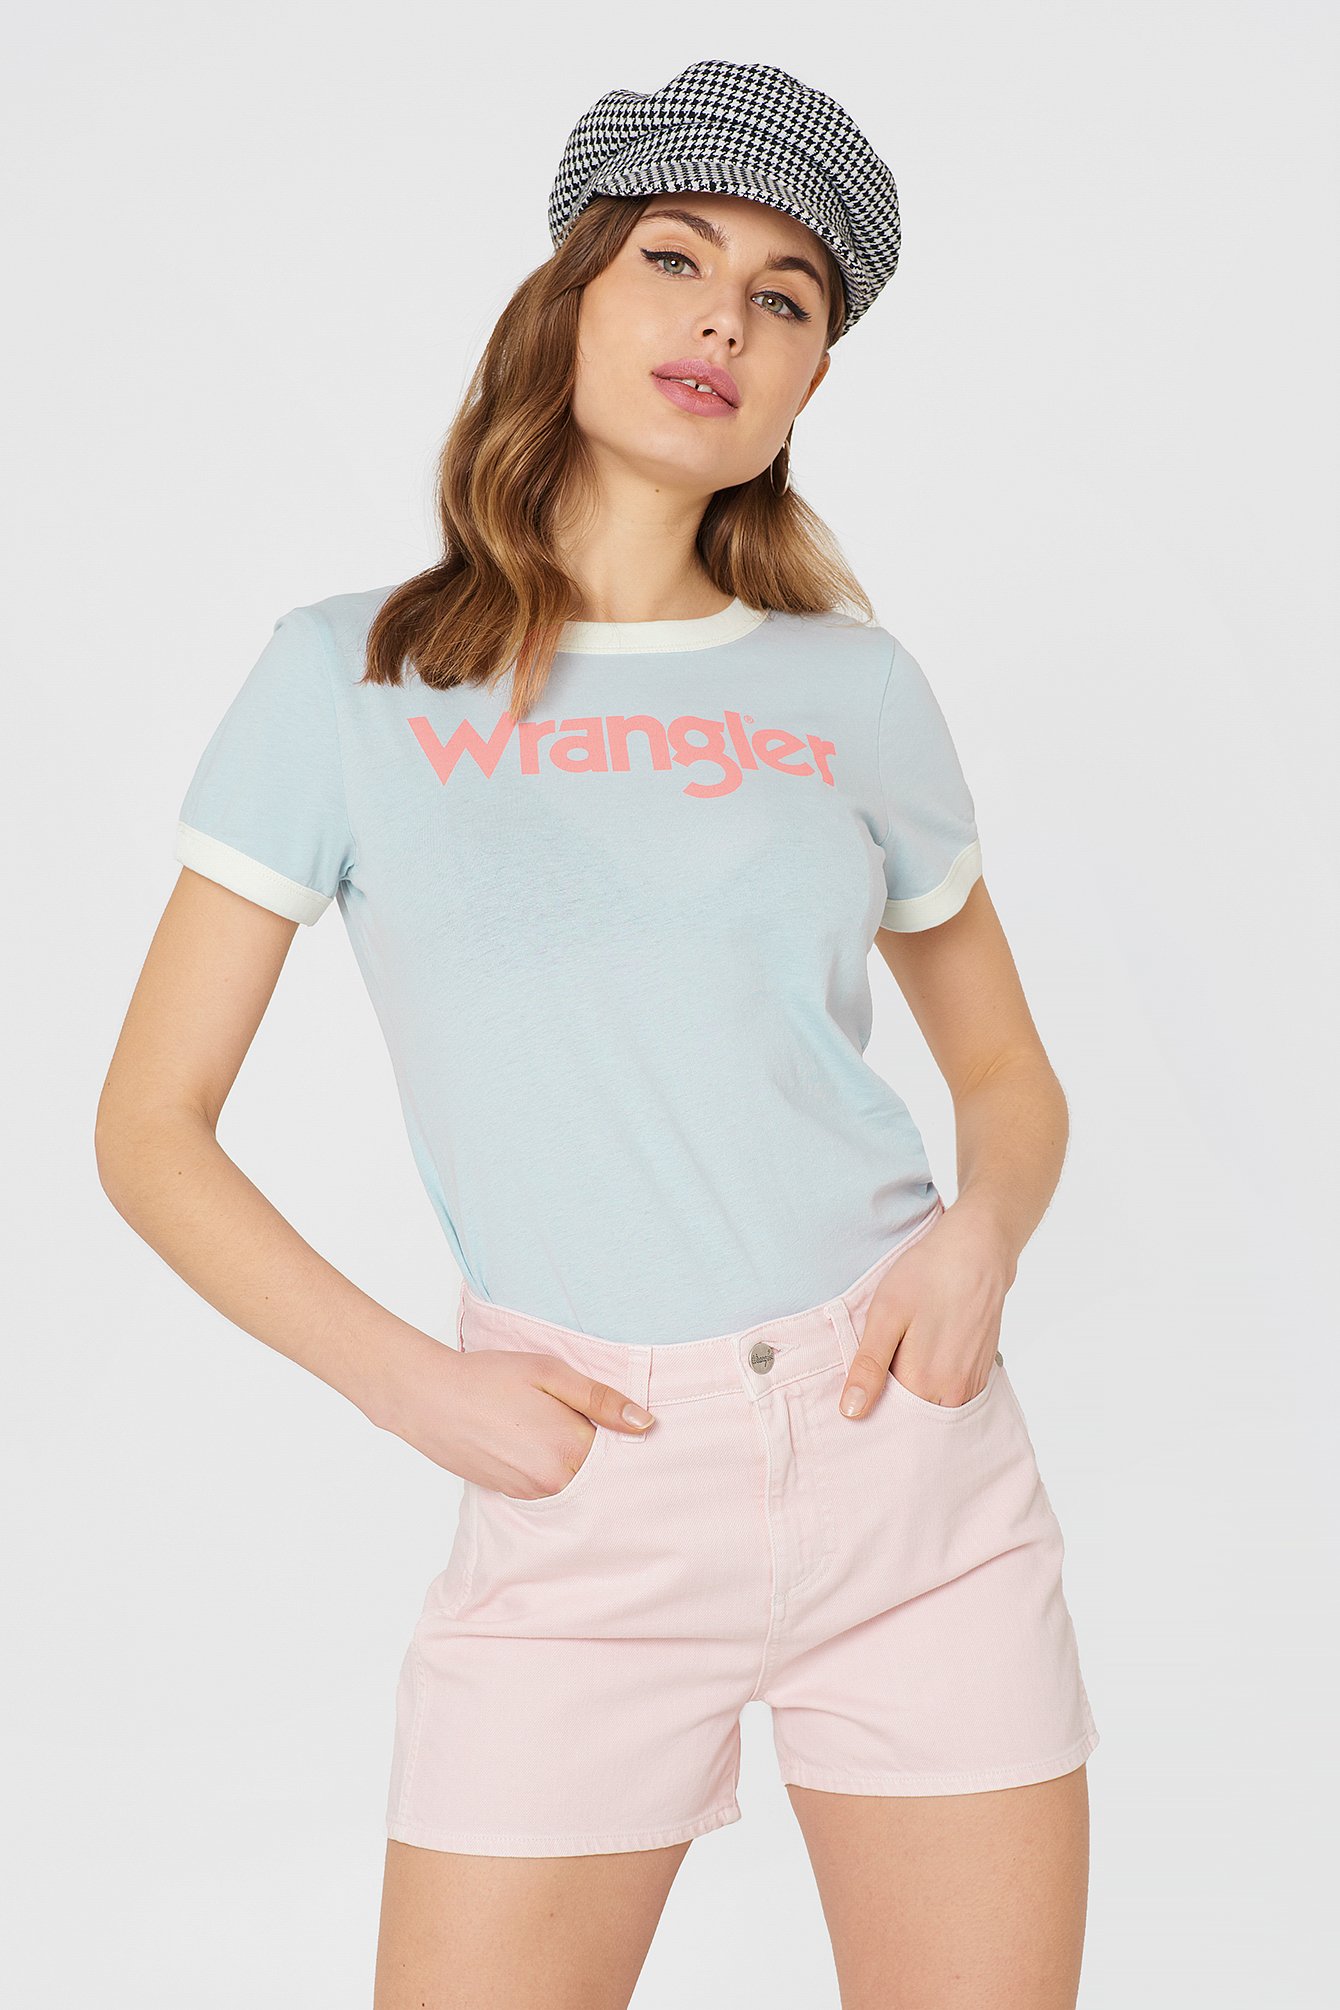 Wrangler Retro Boy Shorts - Pink